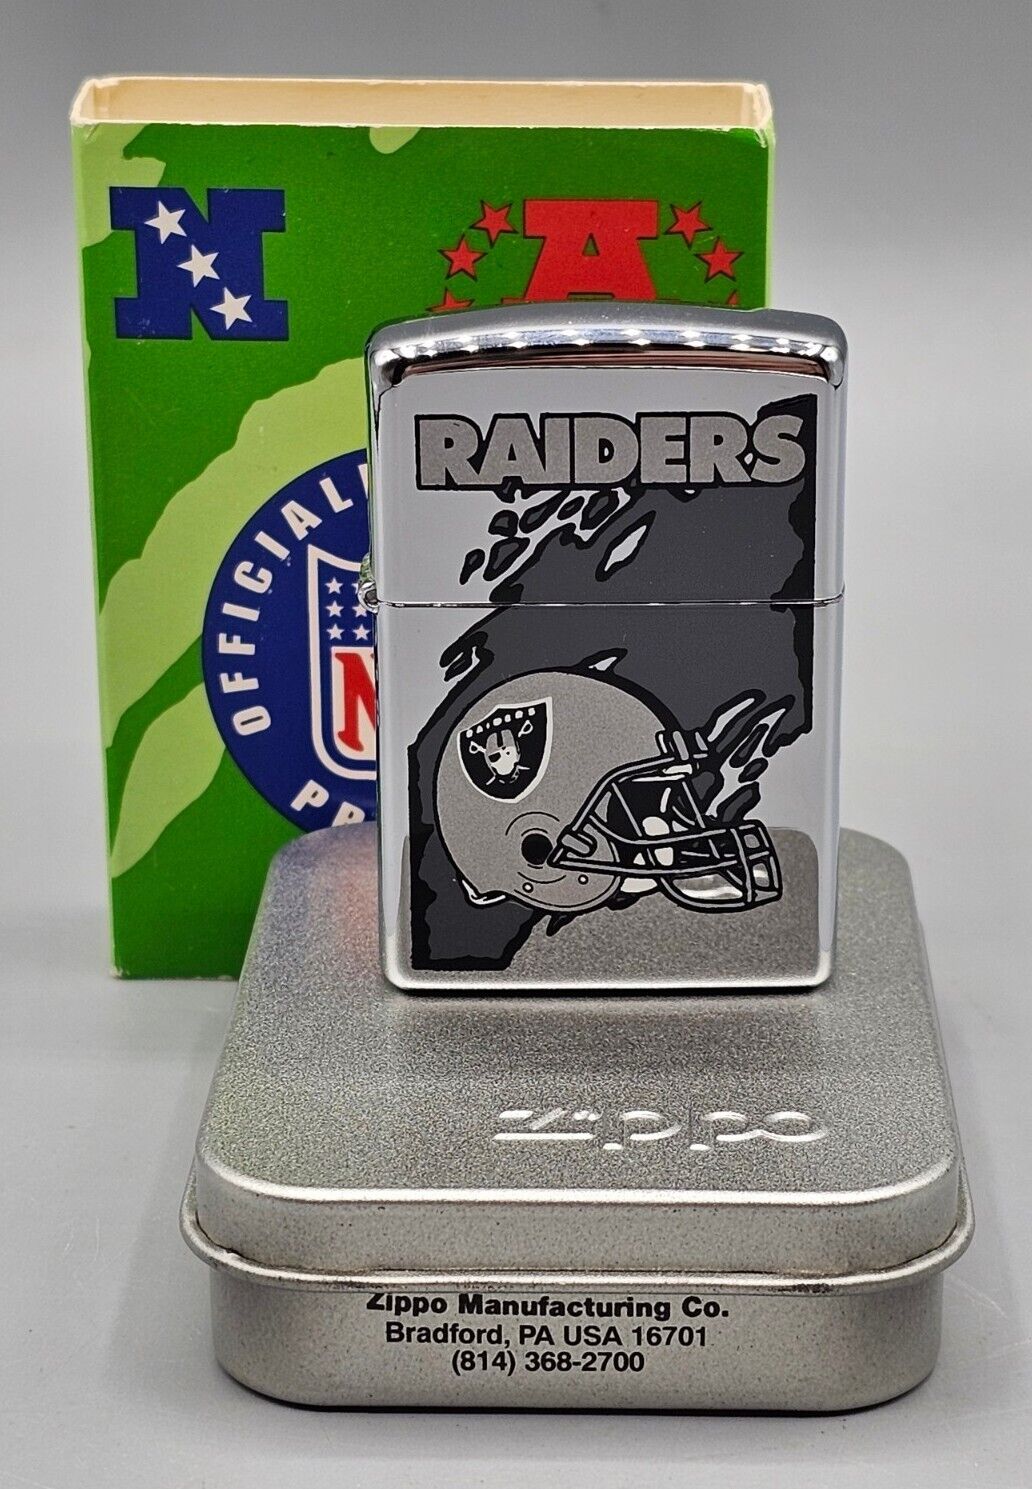 VINTAGE 1997 NFL Las Vegas RAIDERS Chrome Zippo Lighter #467 - NEW in PACKAGE 